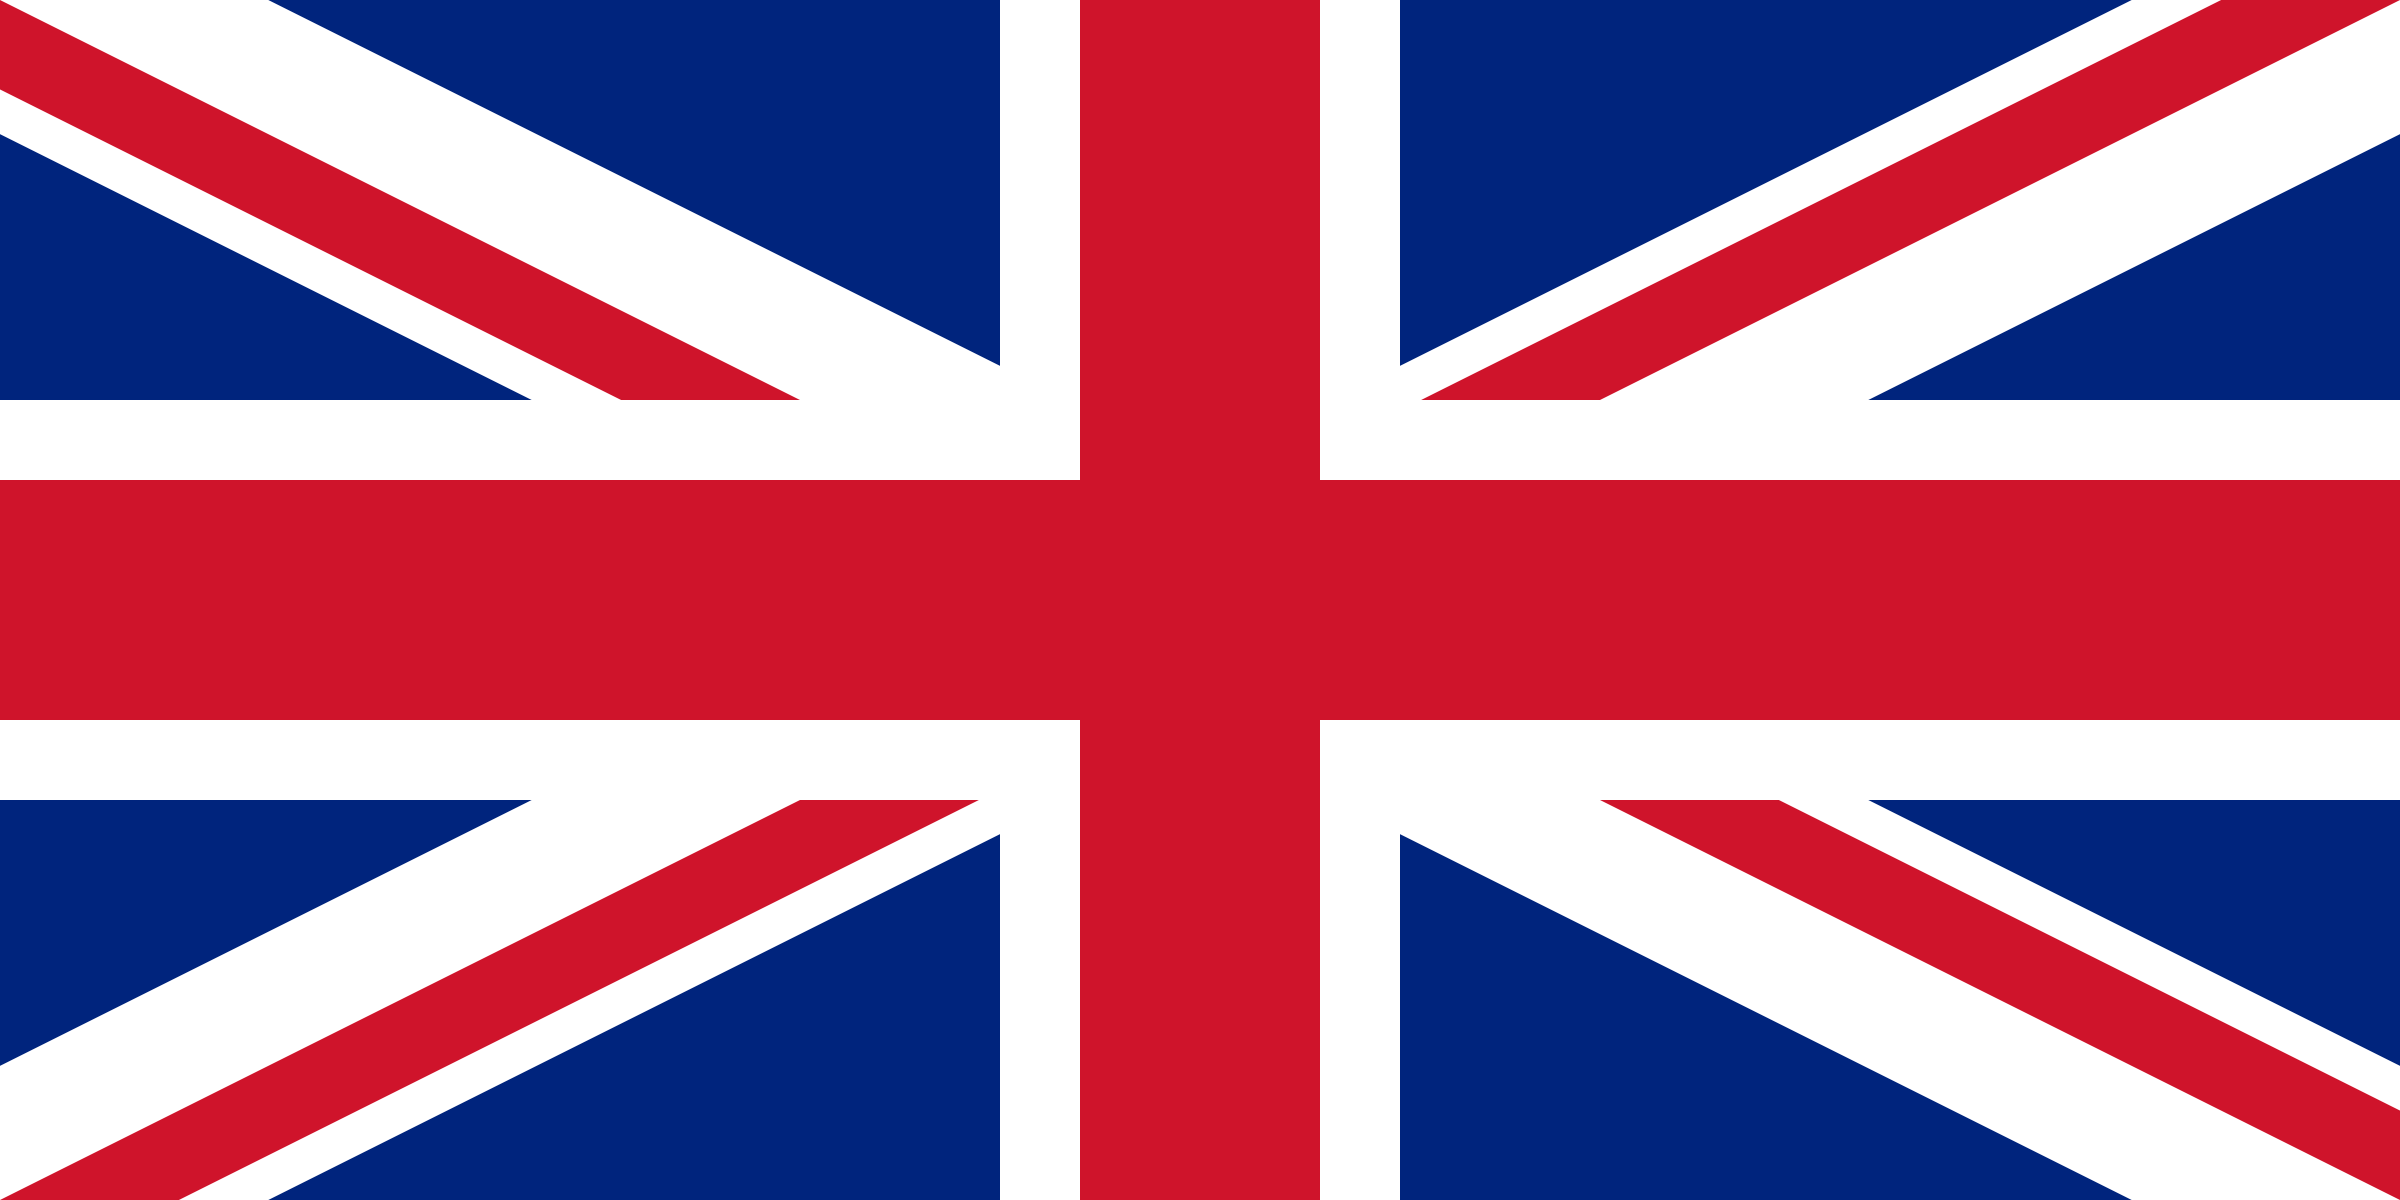 the image shows the united kingdom flag